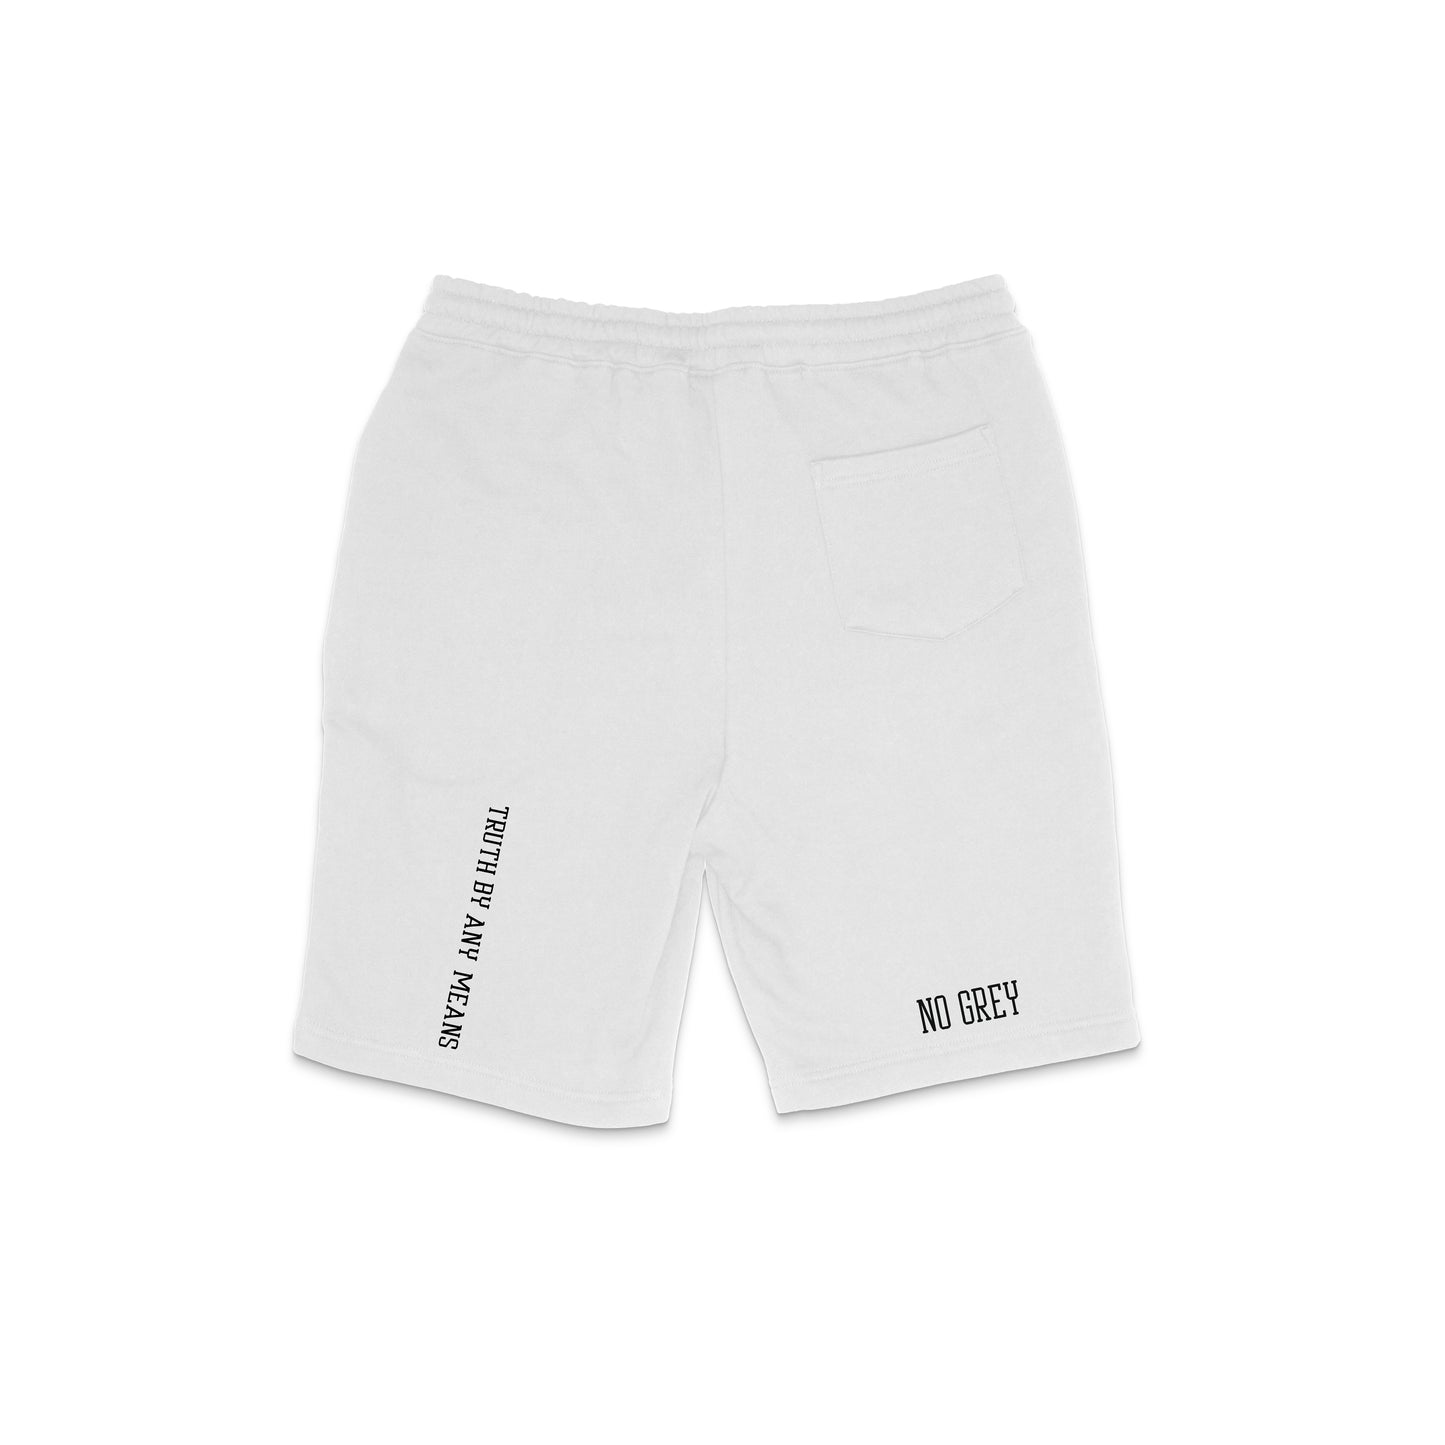 No Grey - Premium Fleece Shorts (White)